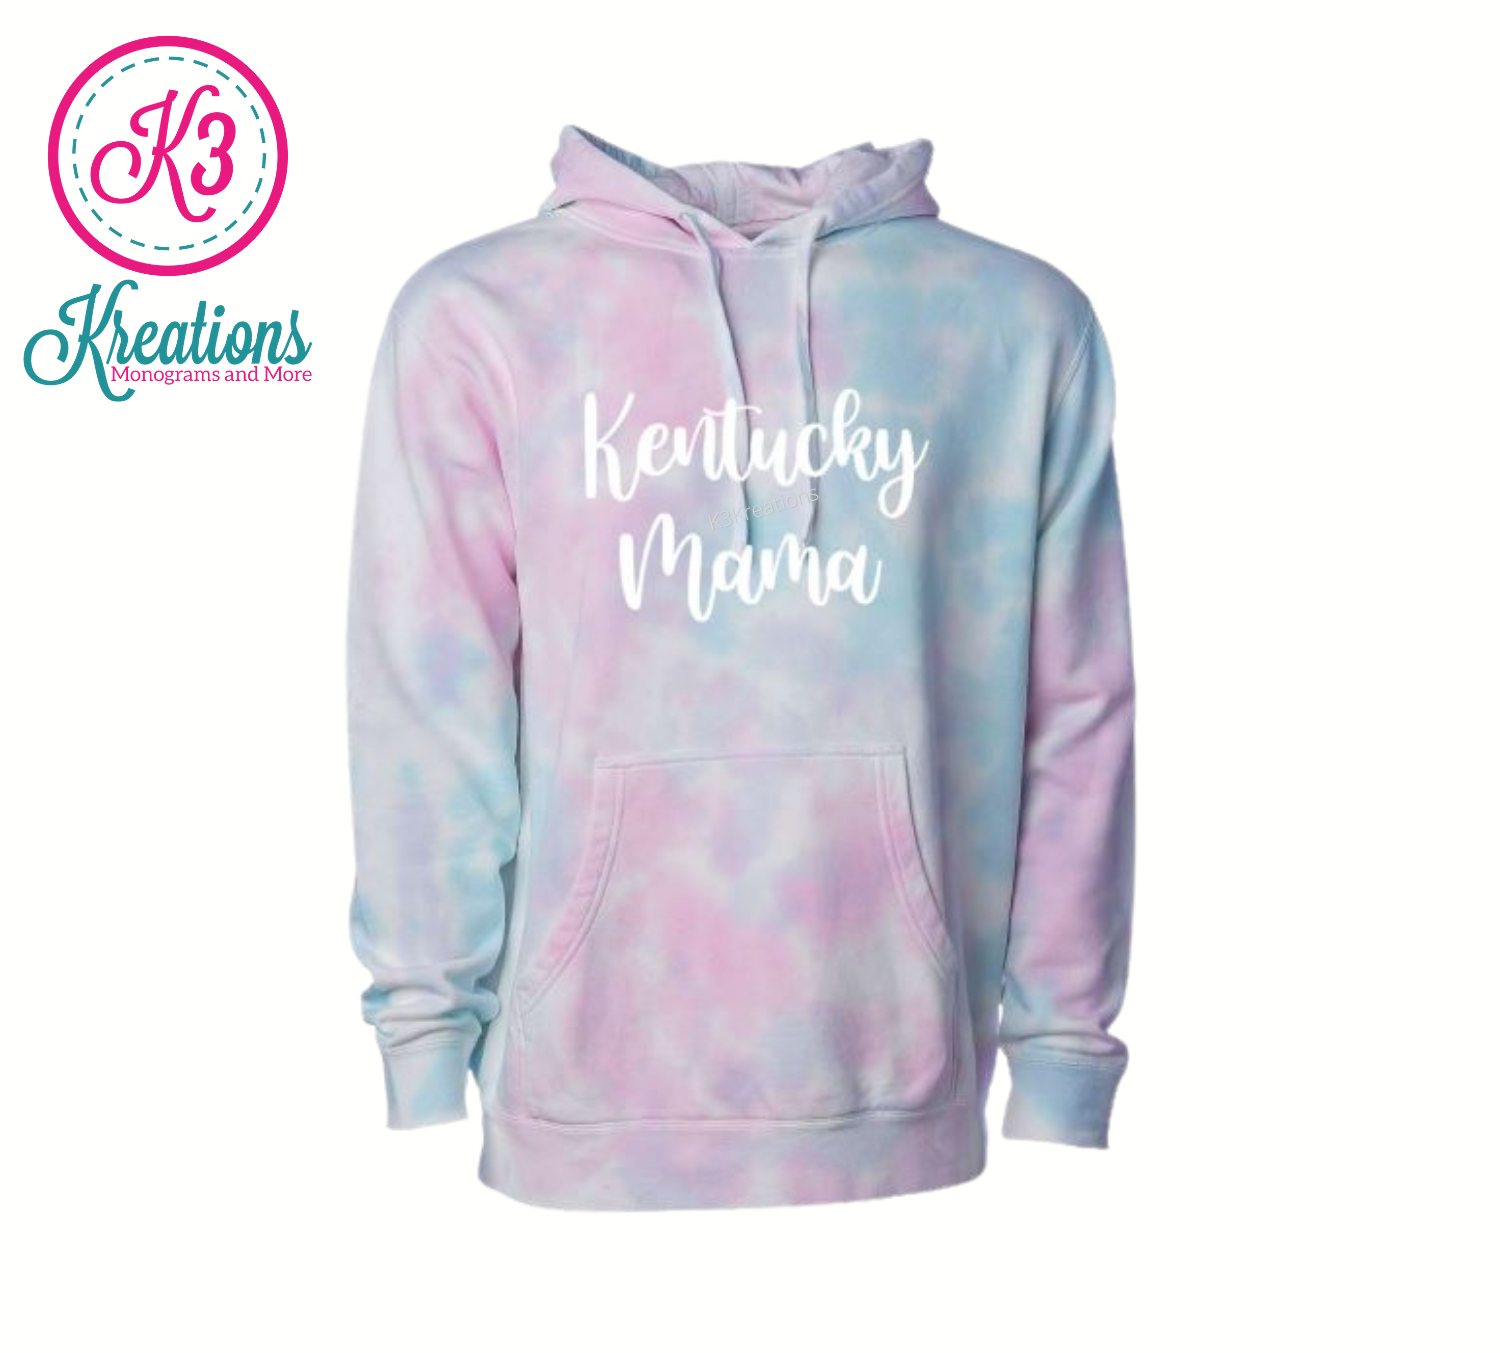 Kentucky Mama Tie-Dye Cotton Candy Hooded Sweatshirt